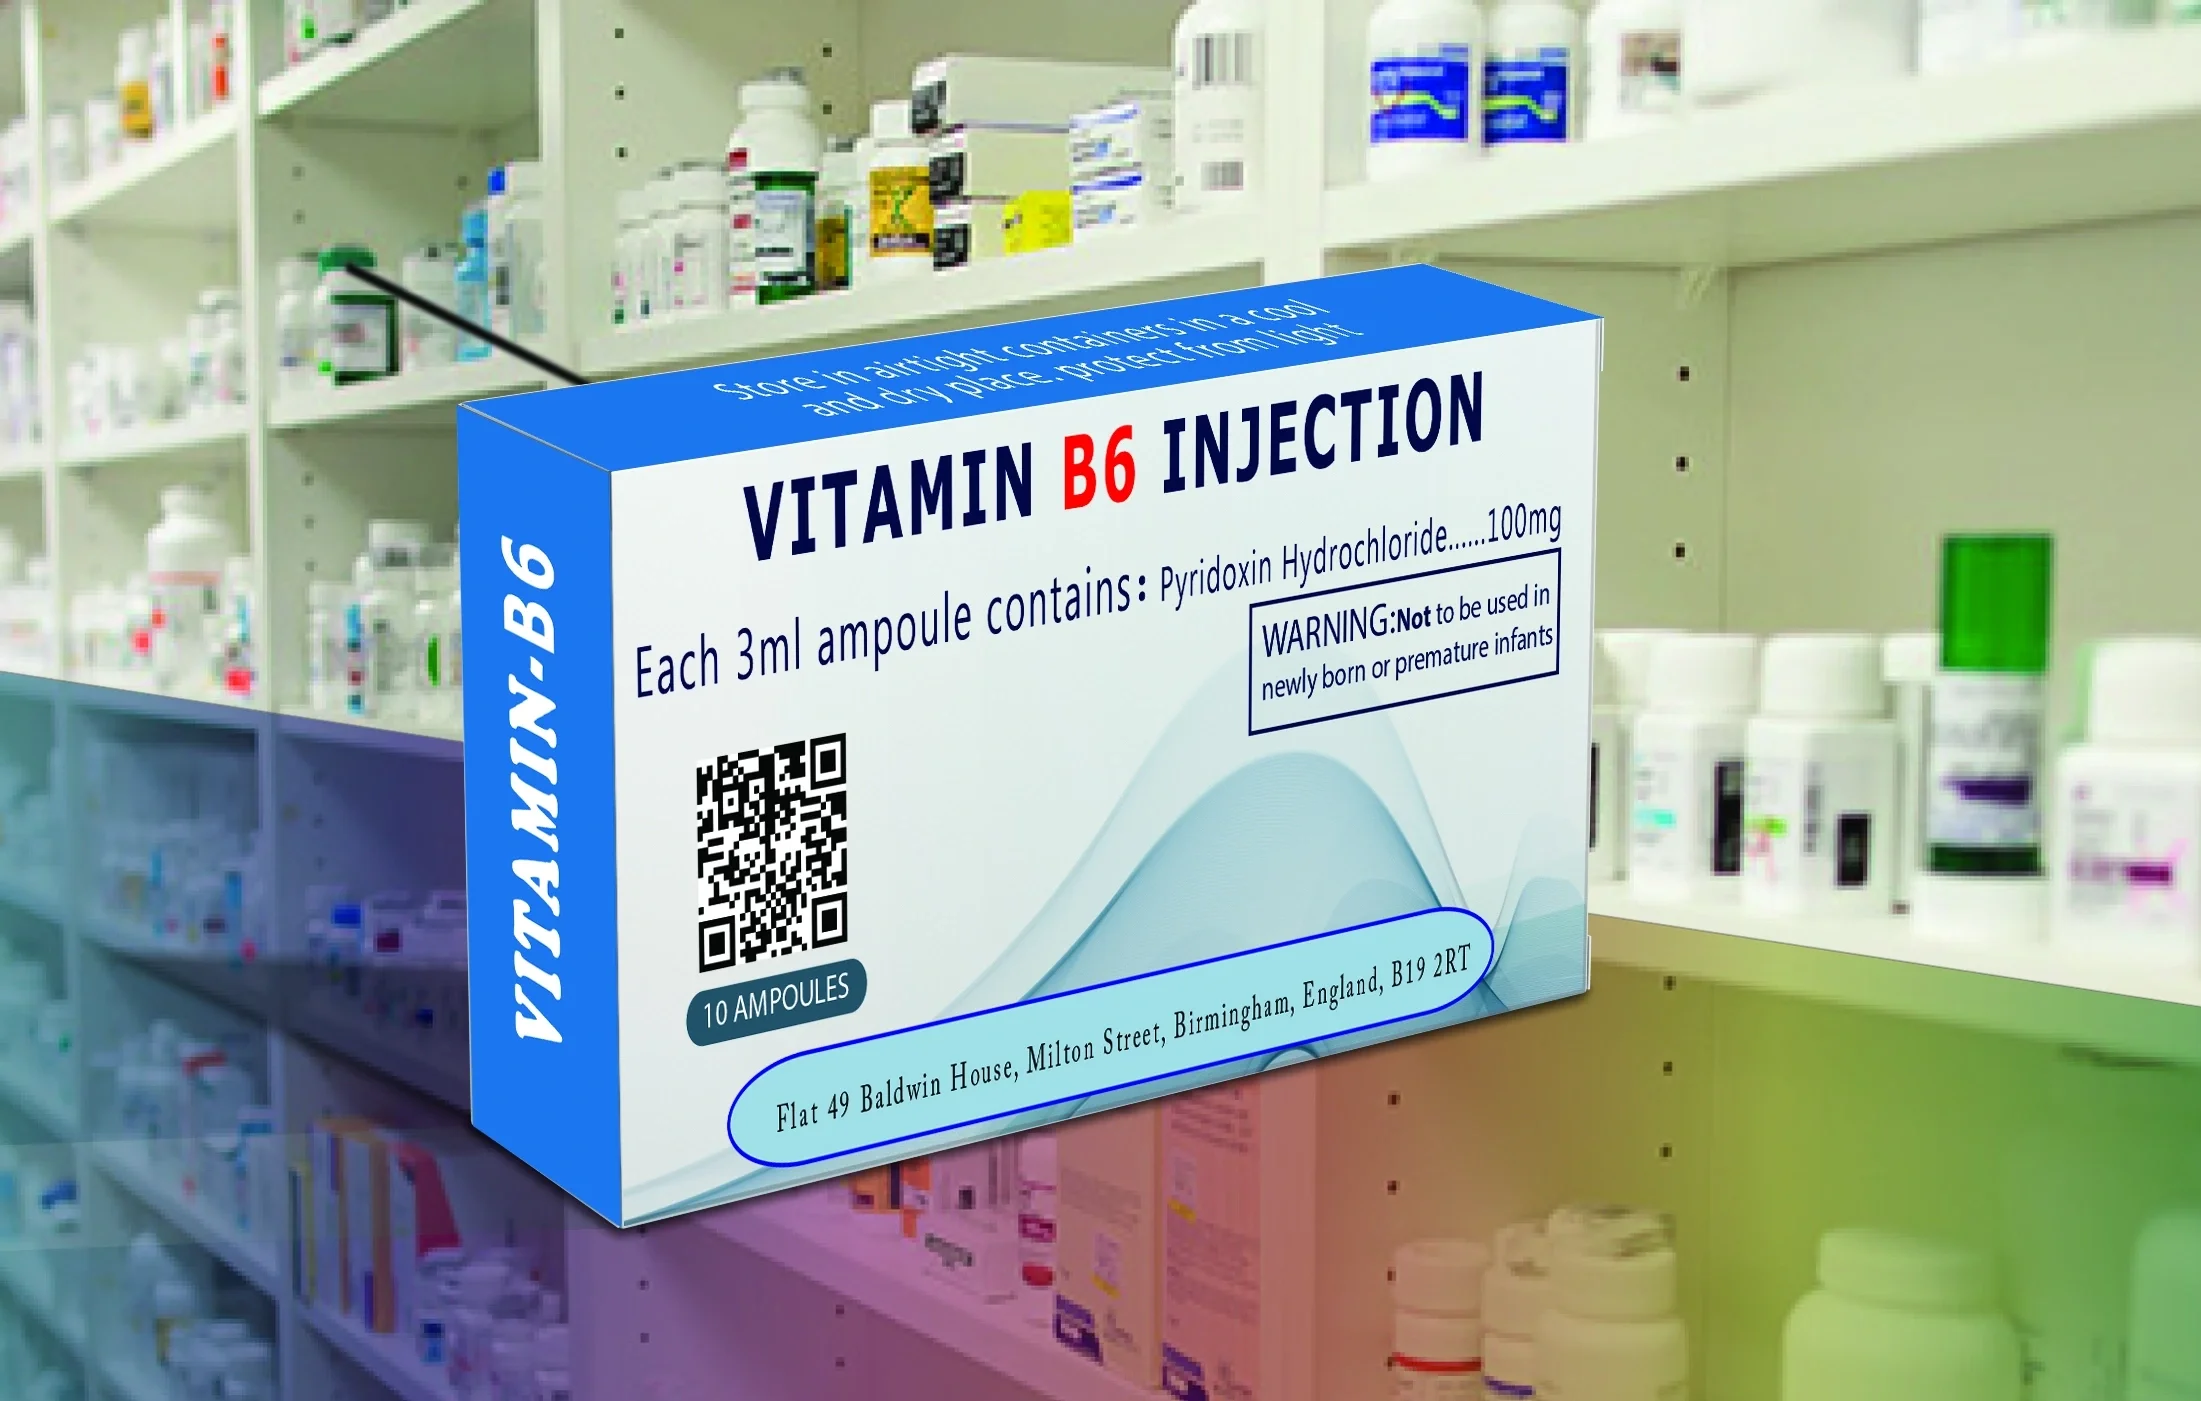 'Vitamines injections', 'Vitamin b6 injection'